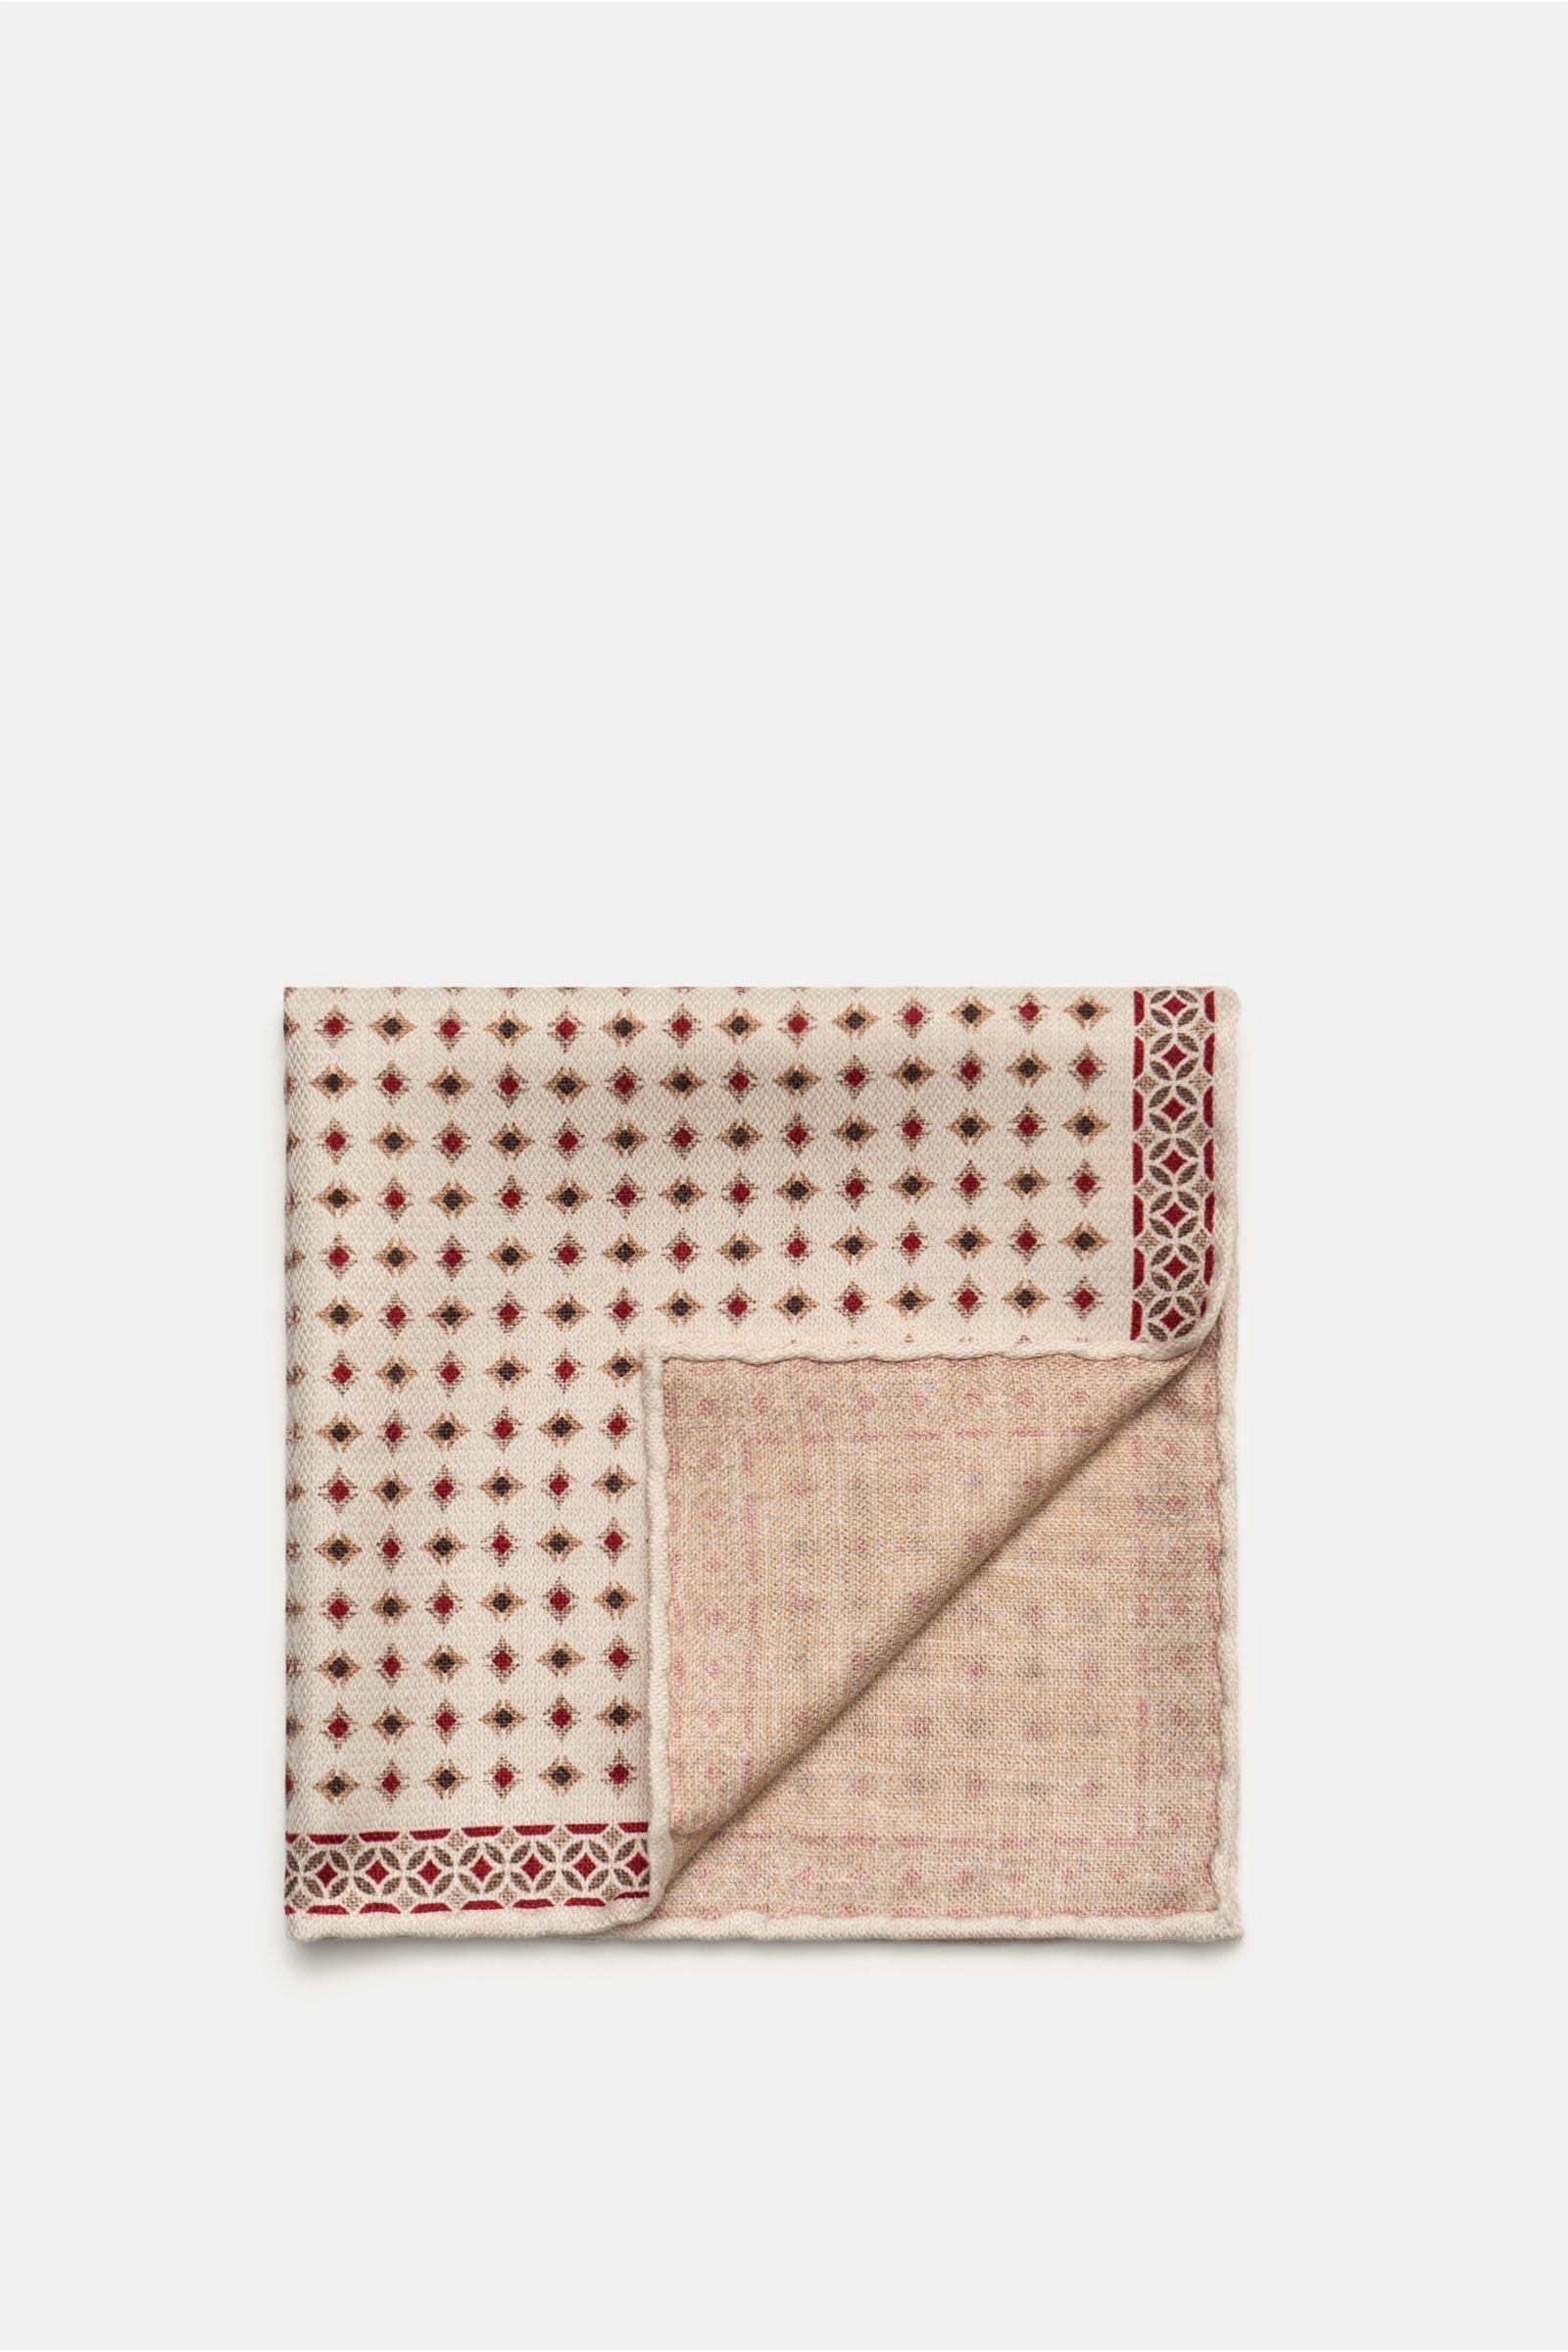 Pocket square cream/burgundy patterned